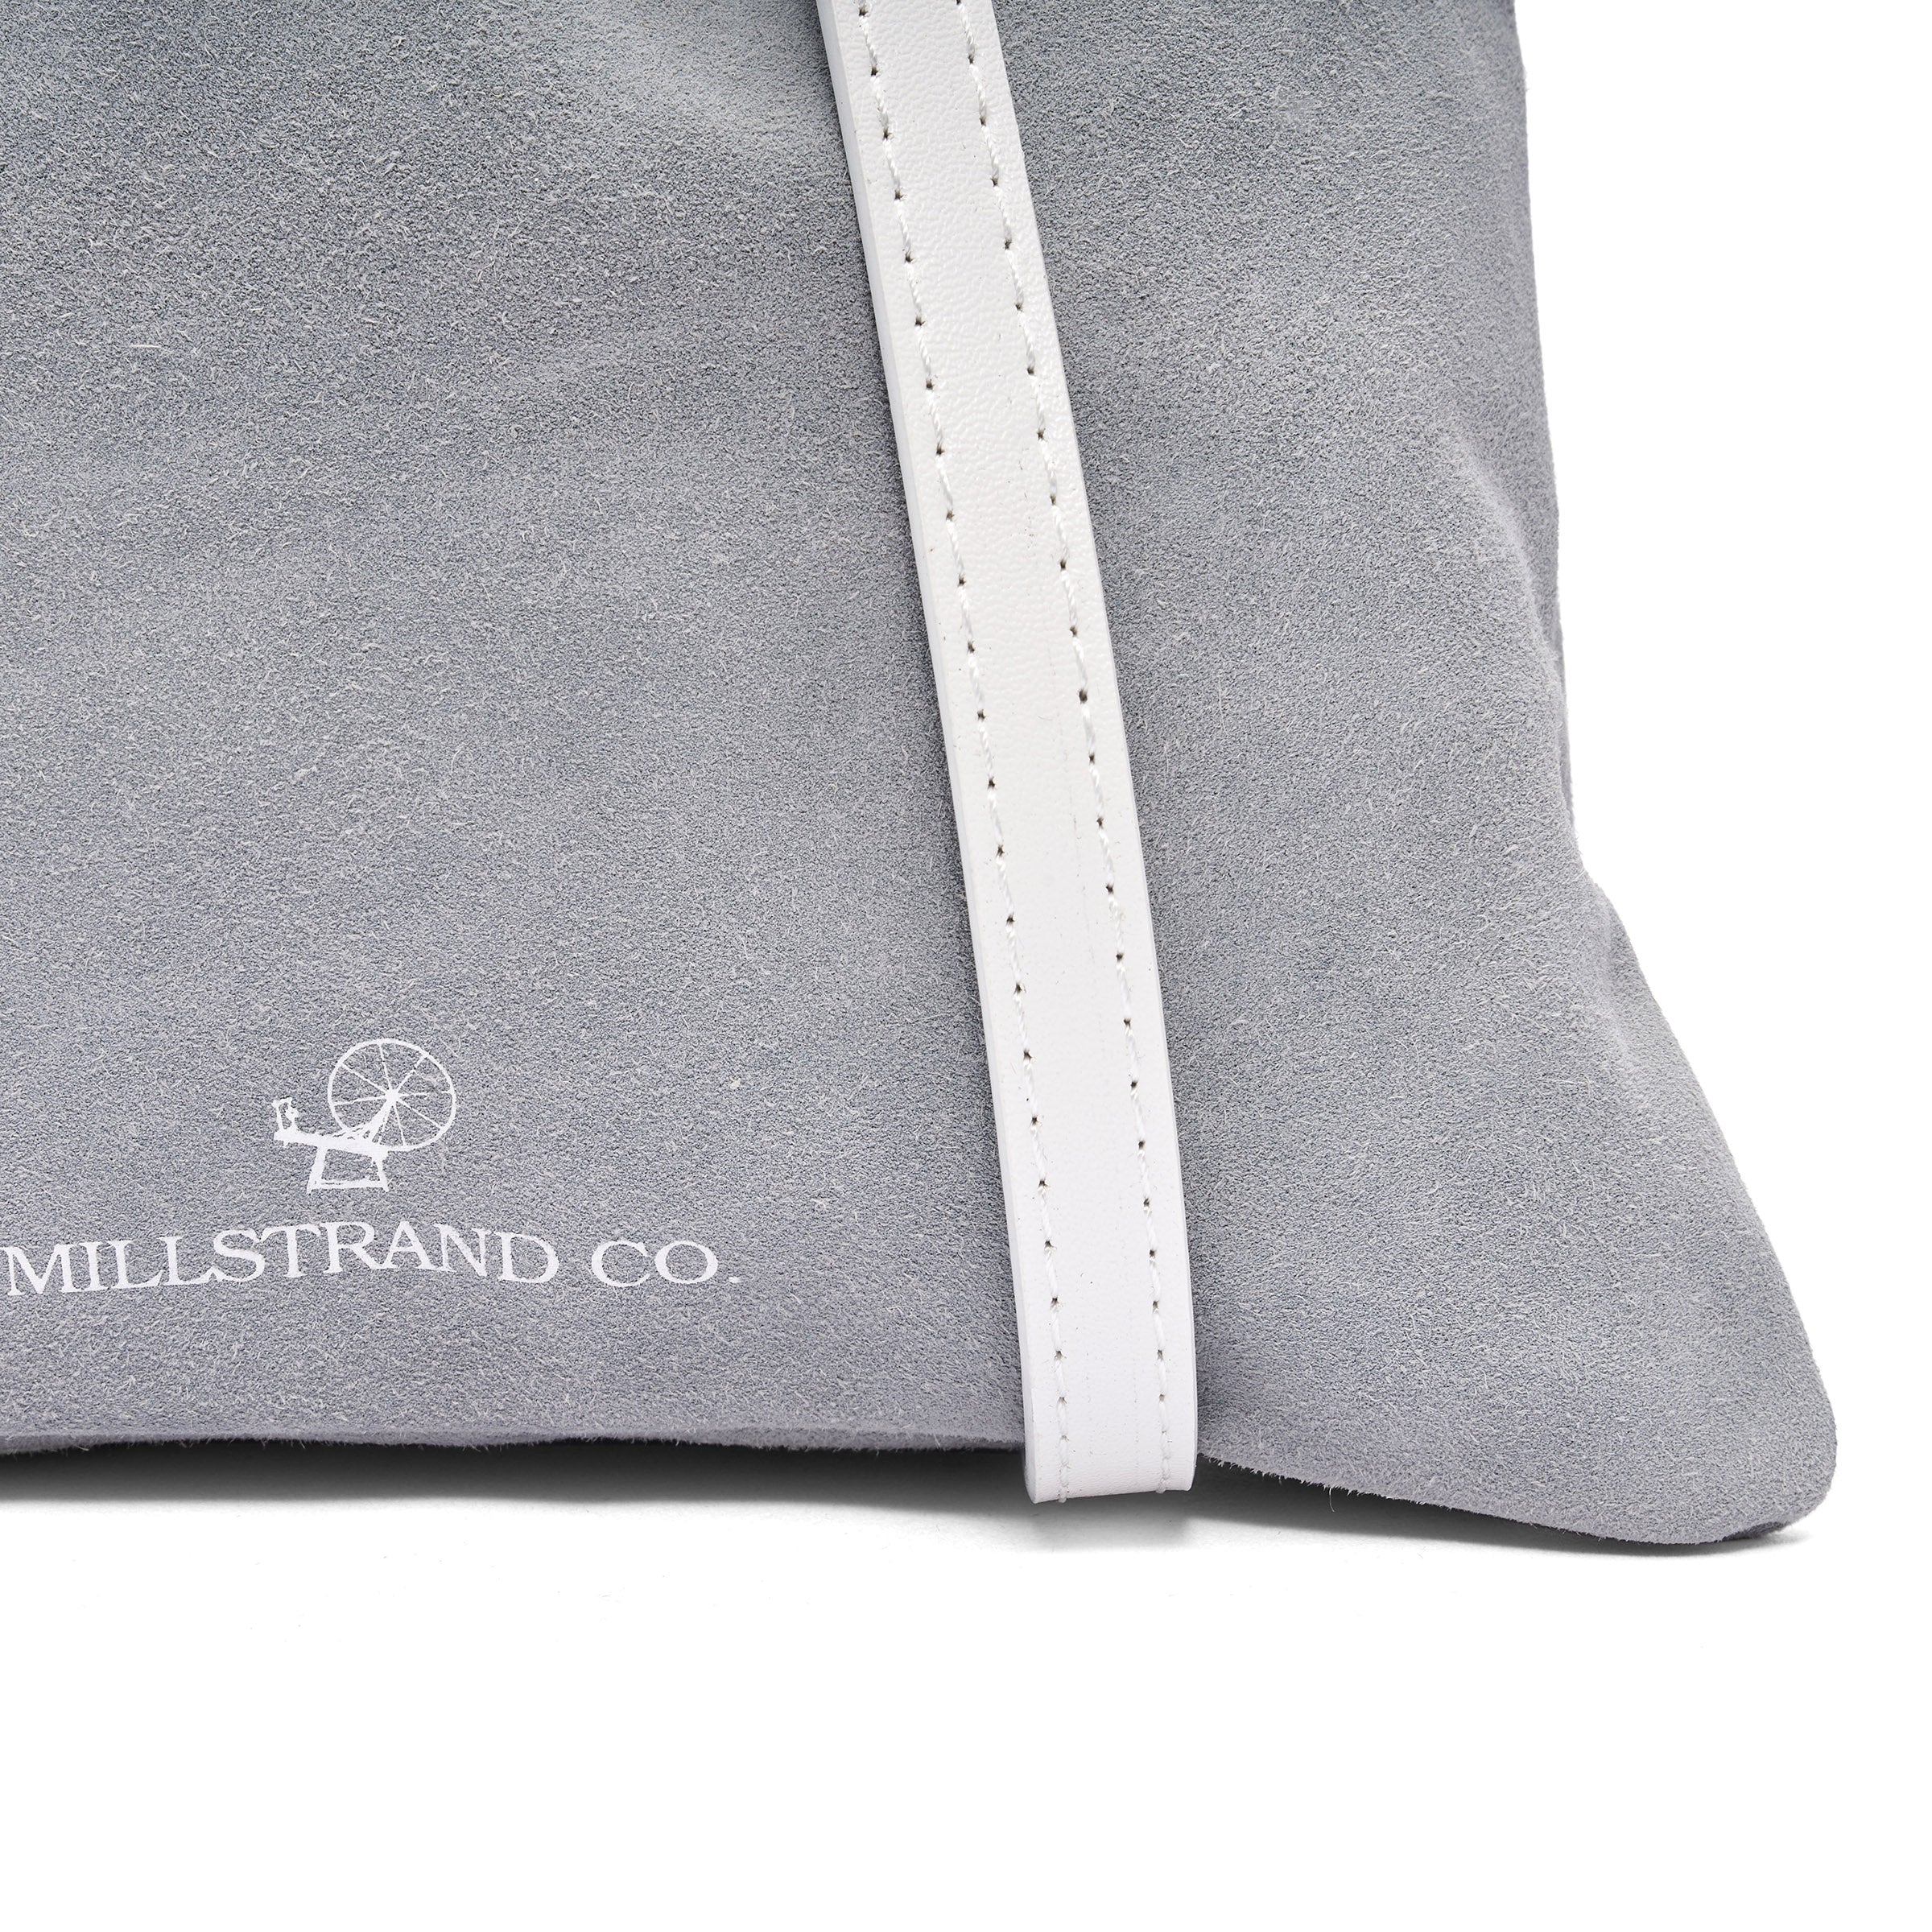 Millstrand Co. Aalya Drawstring Bag